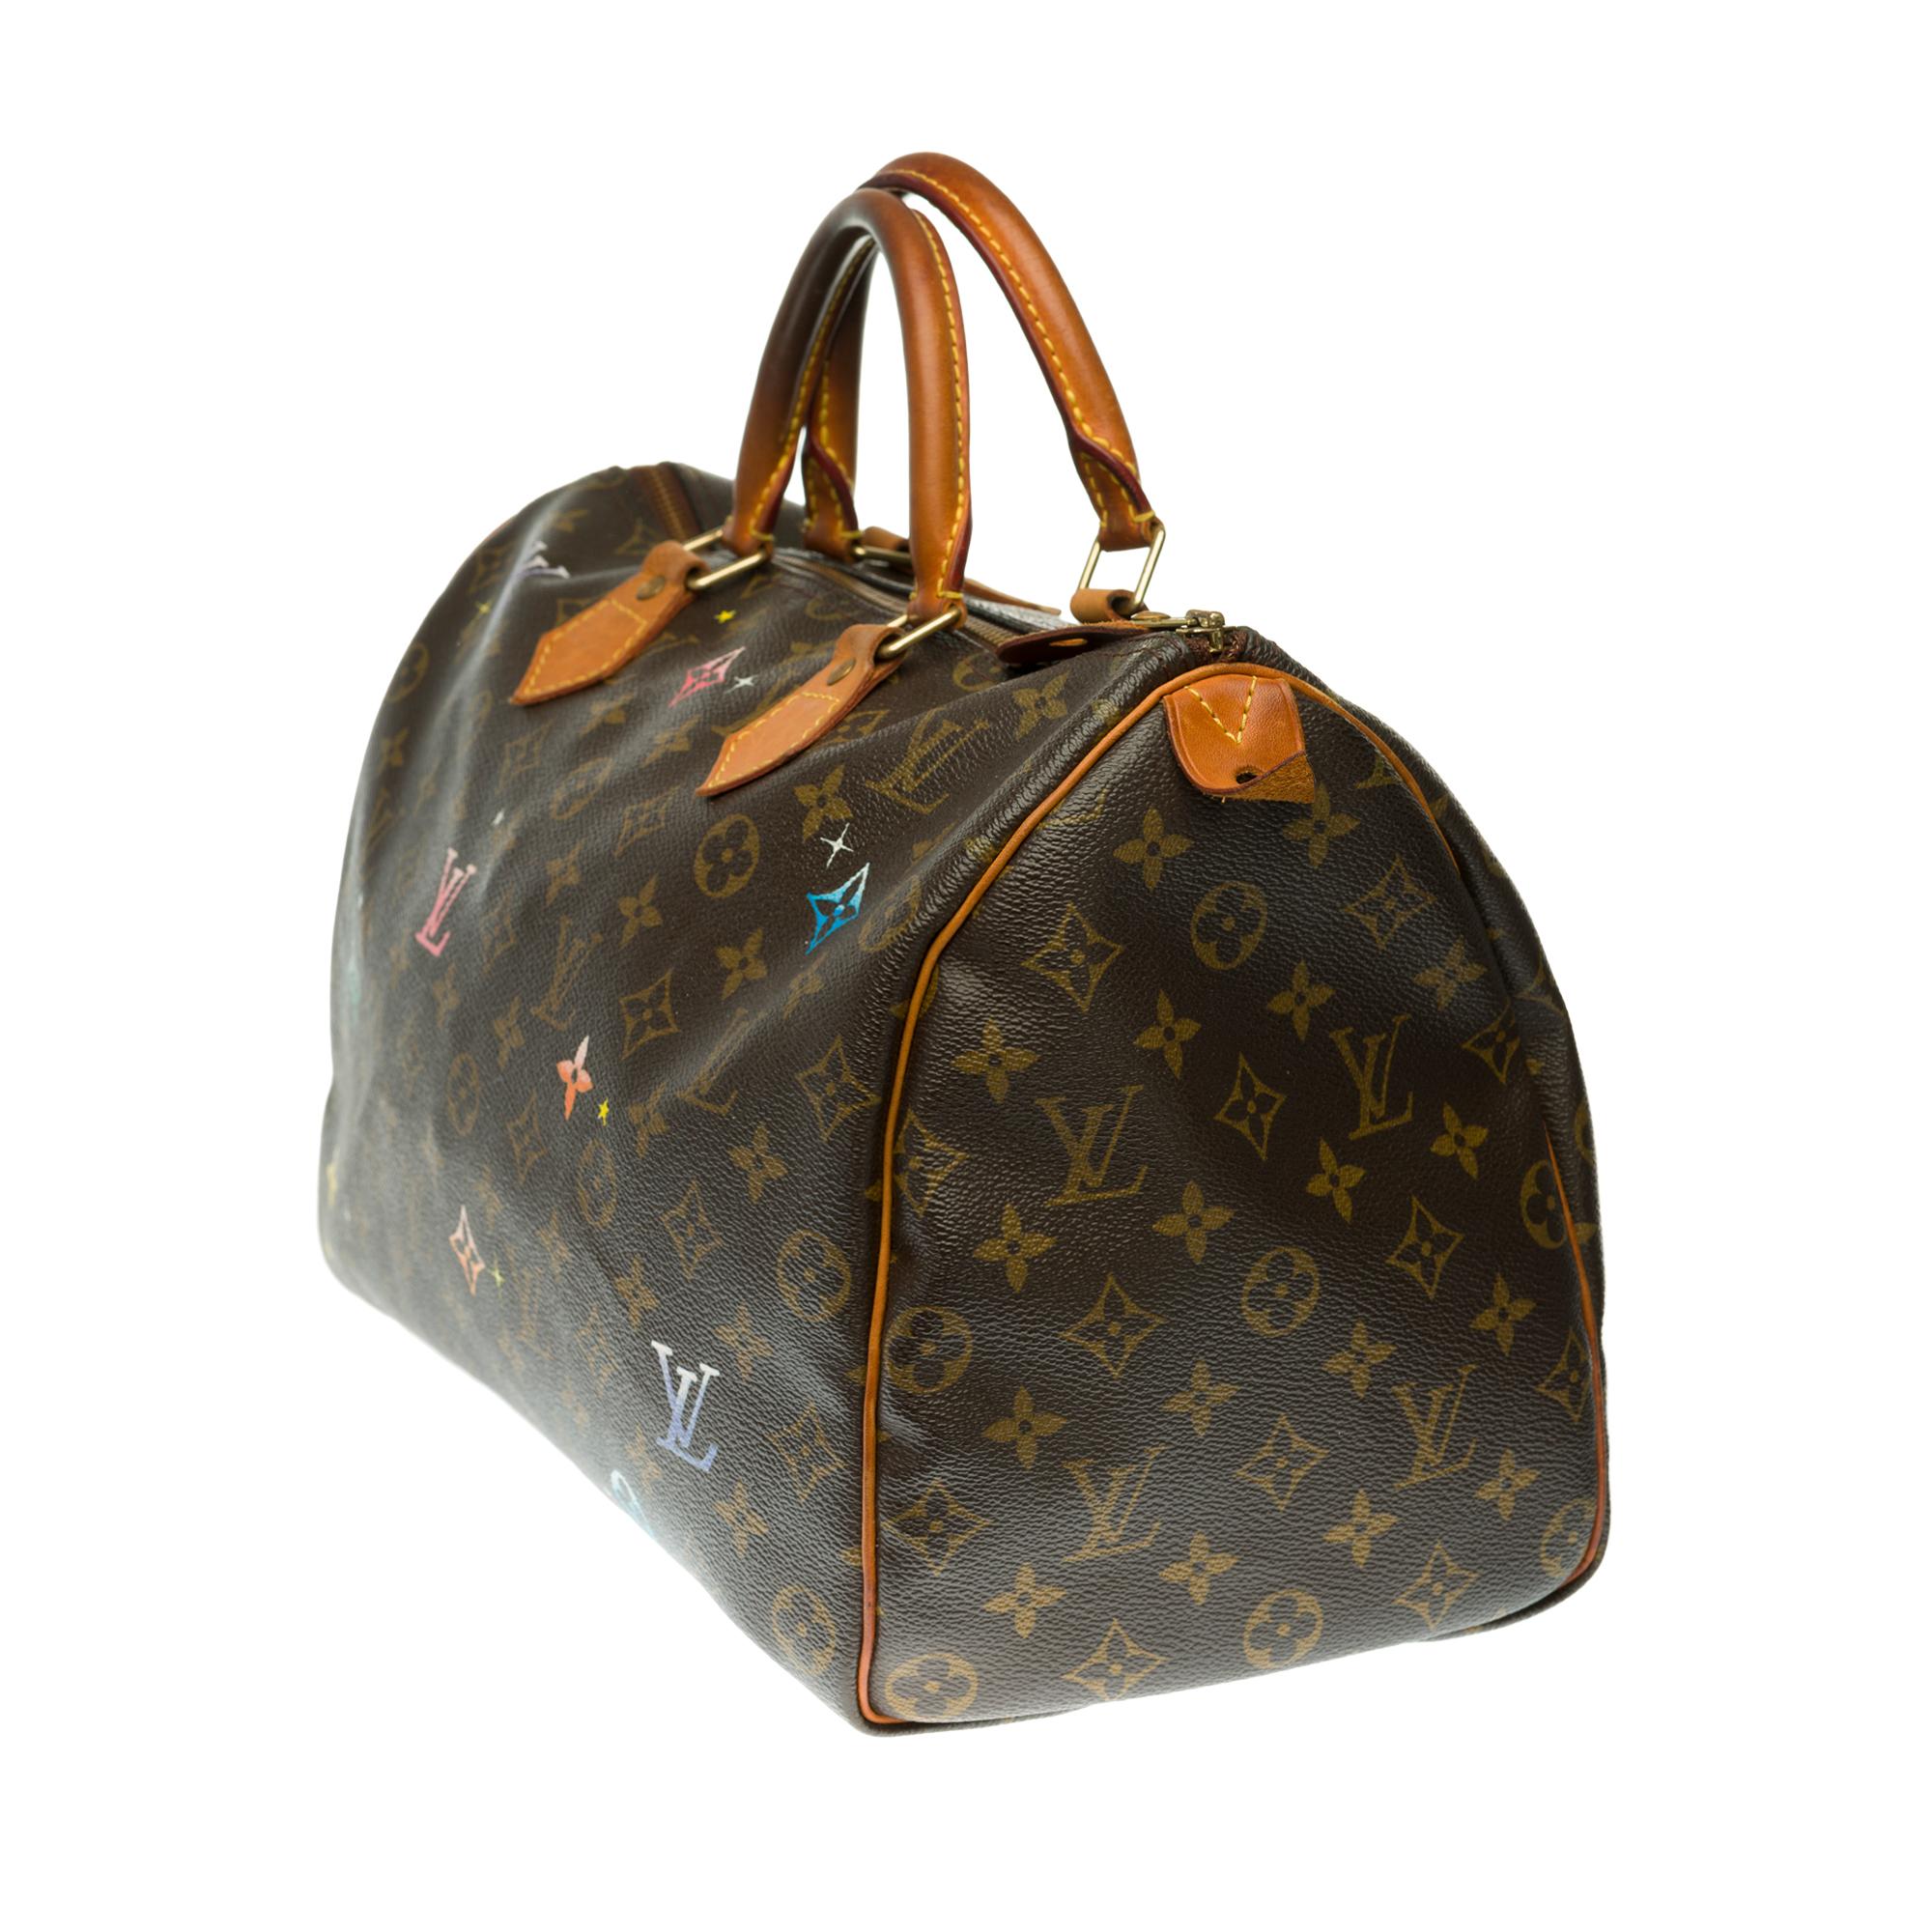 Black Customized Louis Vuitton Speedy 35 handbag in Monogram canvas